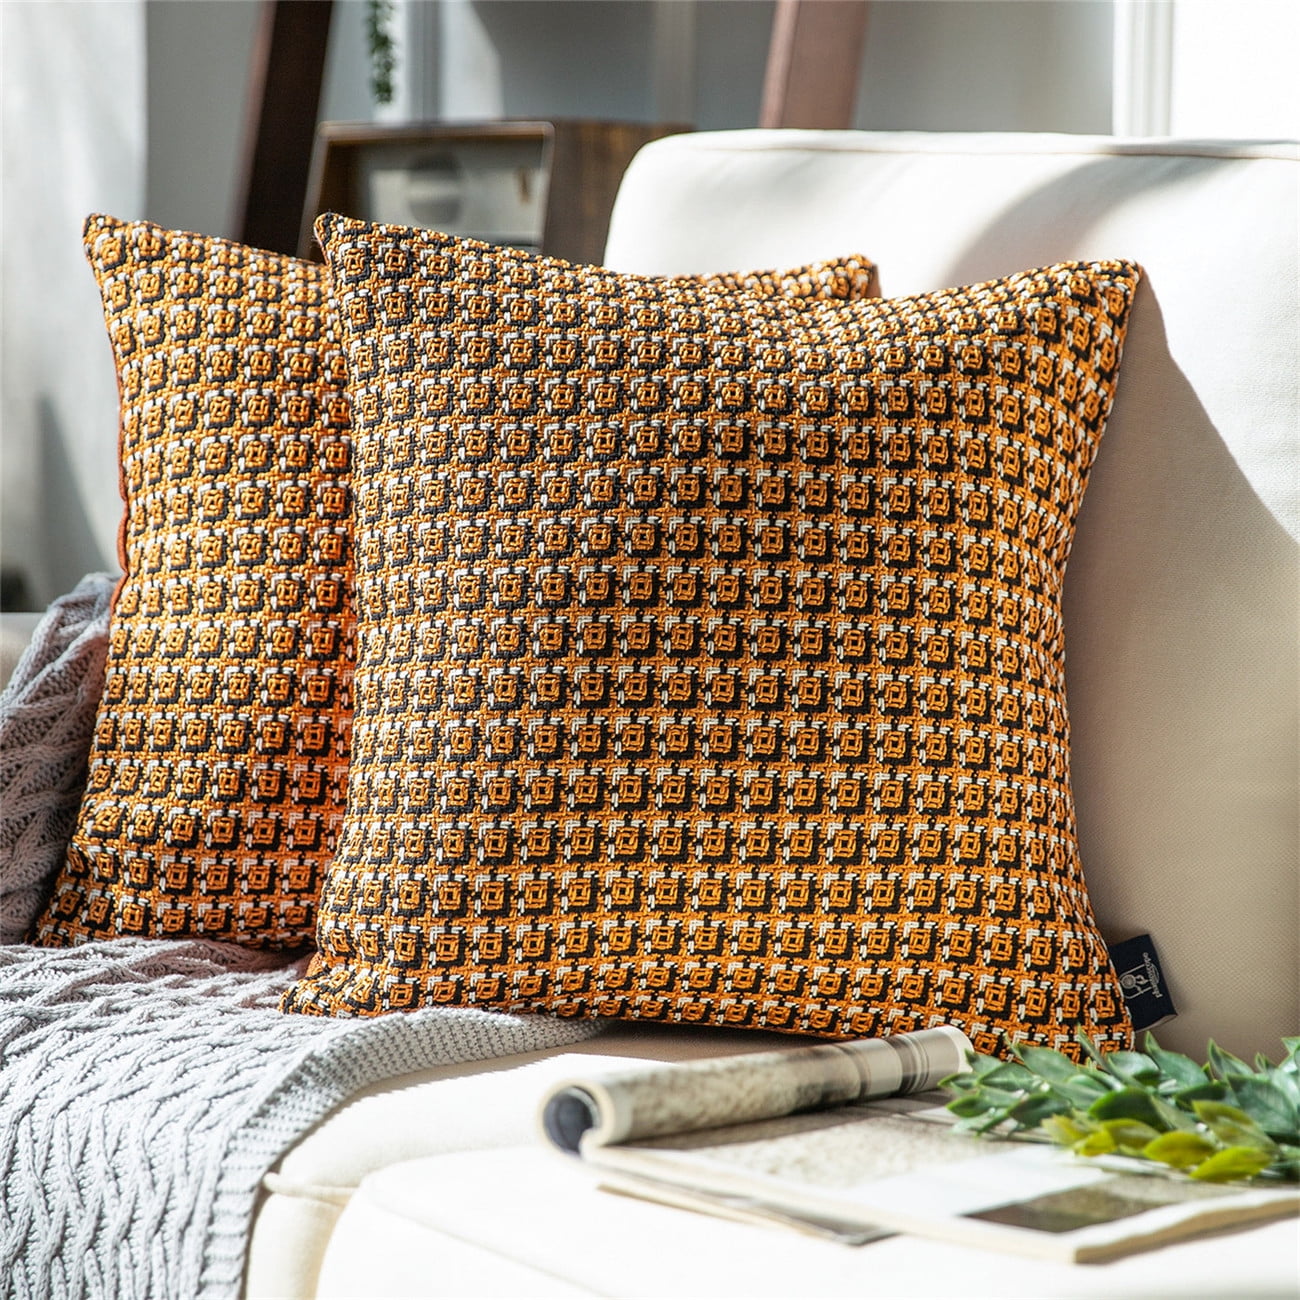 Phantoscope Tropical Series Decorative Throw Pillows, Zebra Stripe, 18 inch x 18 inch, Set of 4, Size: Full Pillows